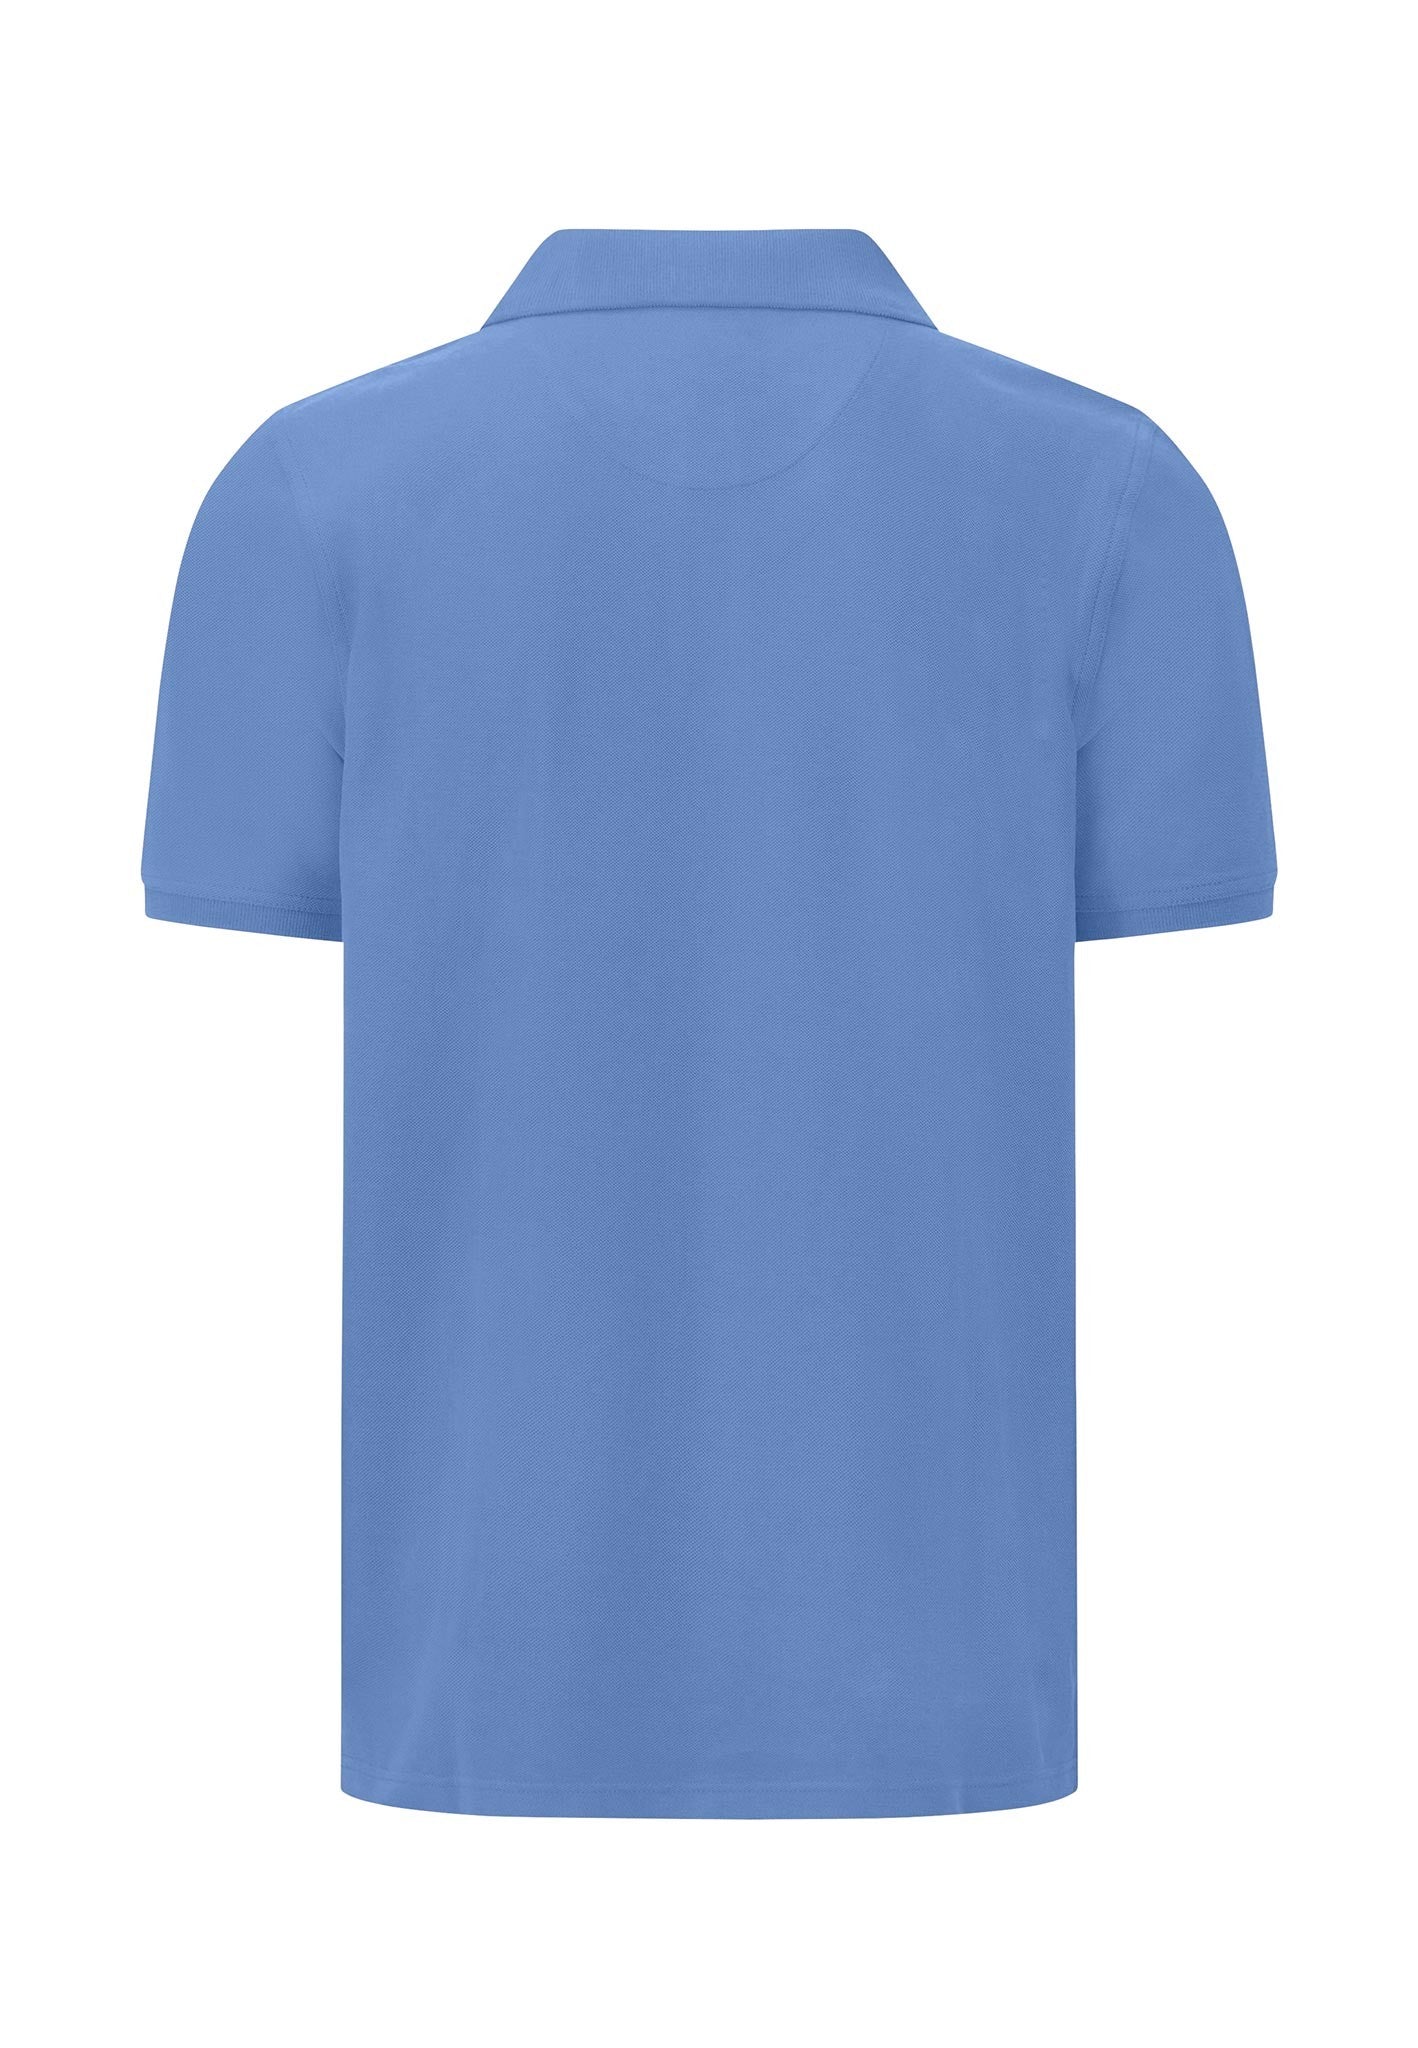 Fynch Hatton Supima Cotton Polo Shirt Blue